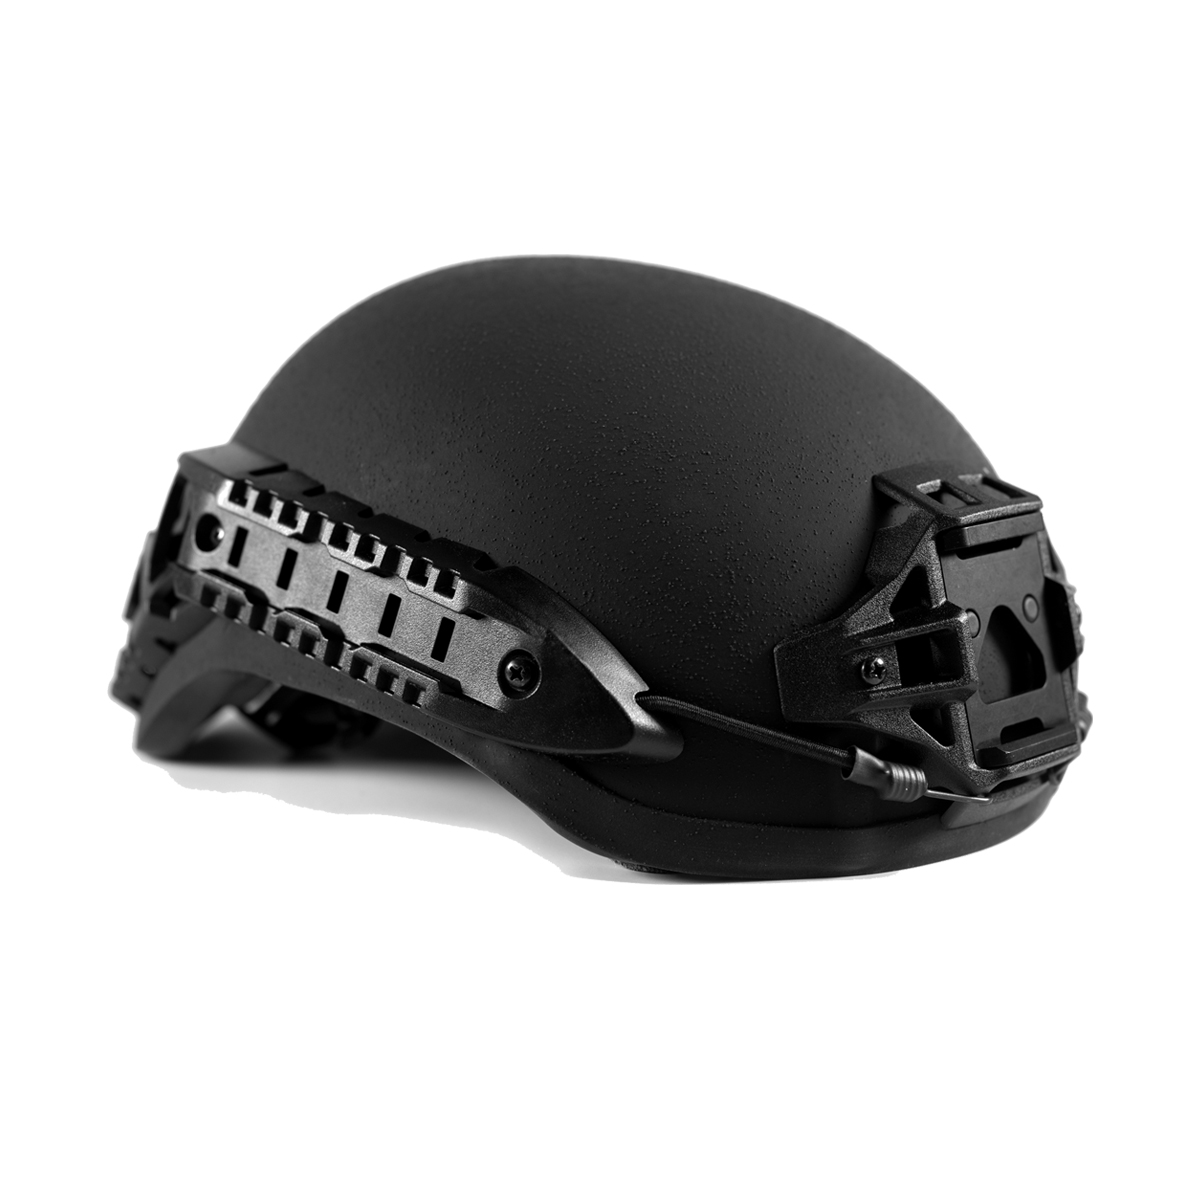 Avon Protection F90 Ballistic Helmet - High Cut